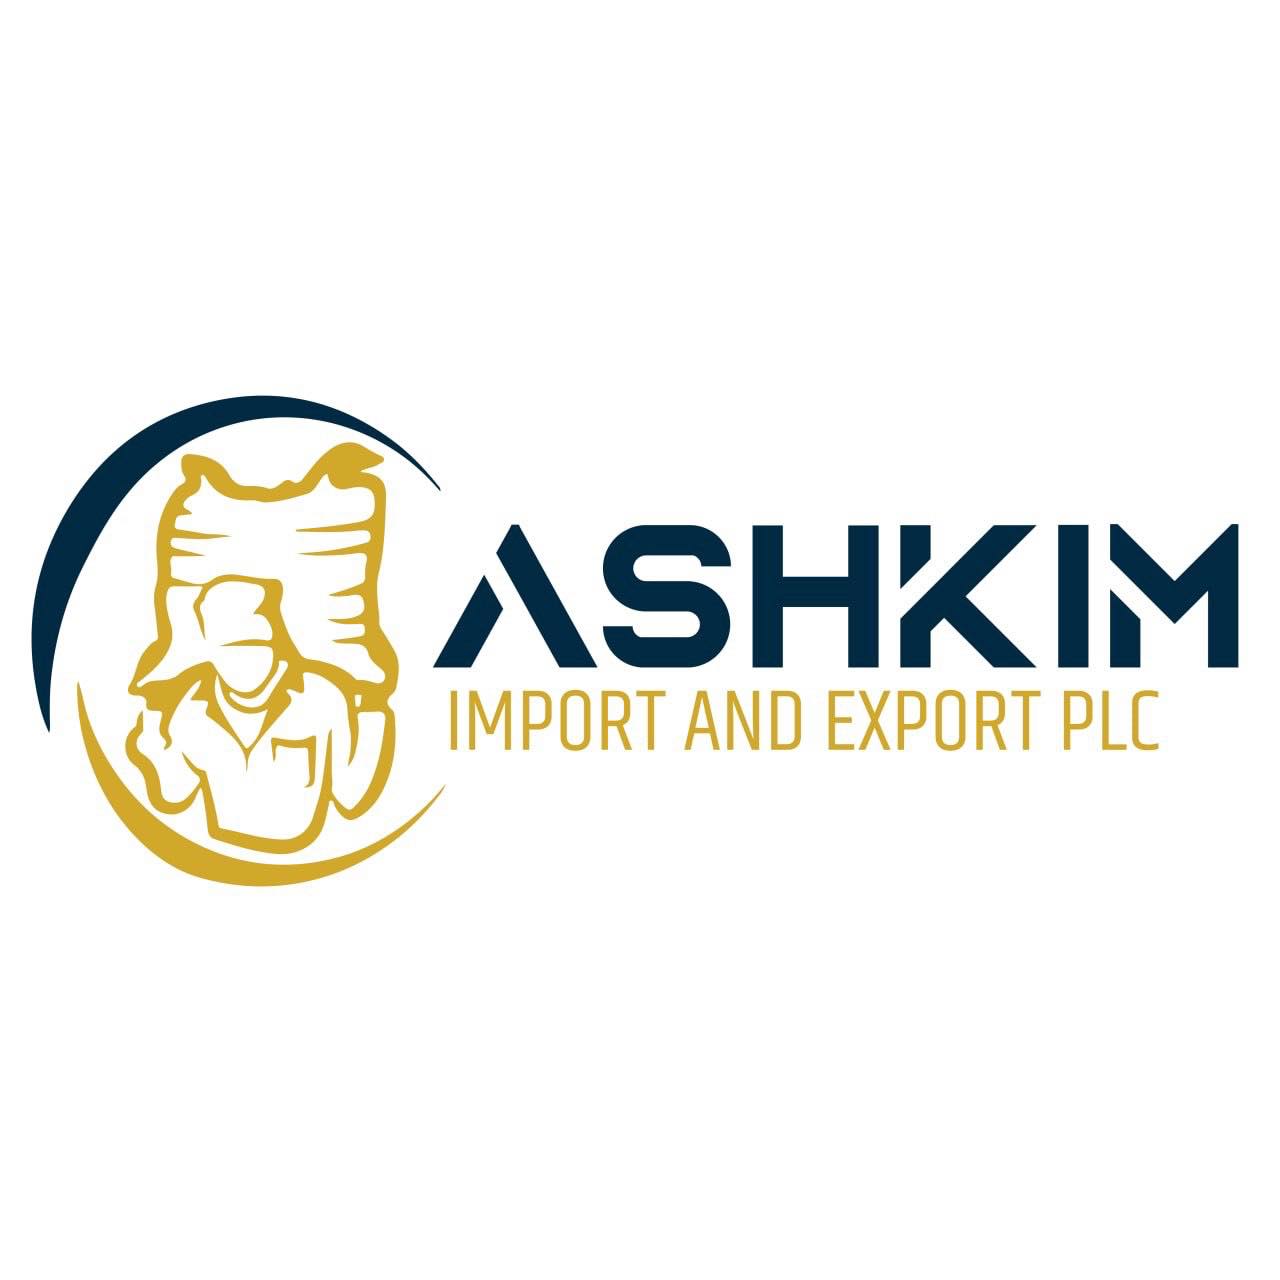 ASH KIM IMPORT AND EXPORT PLC